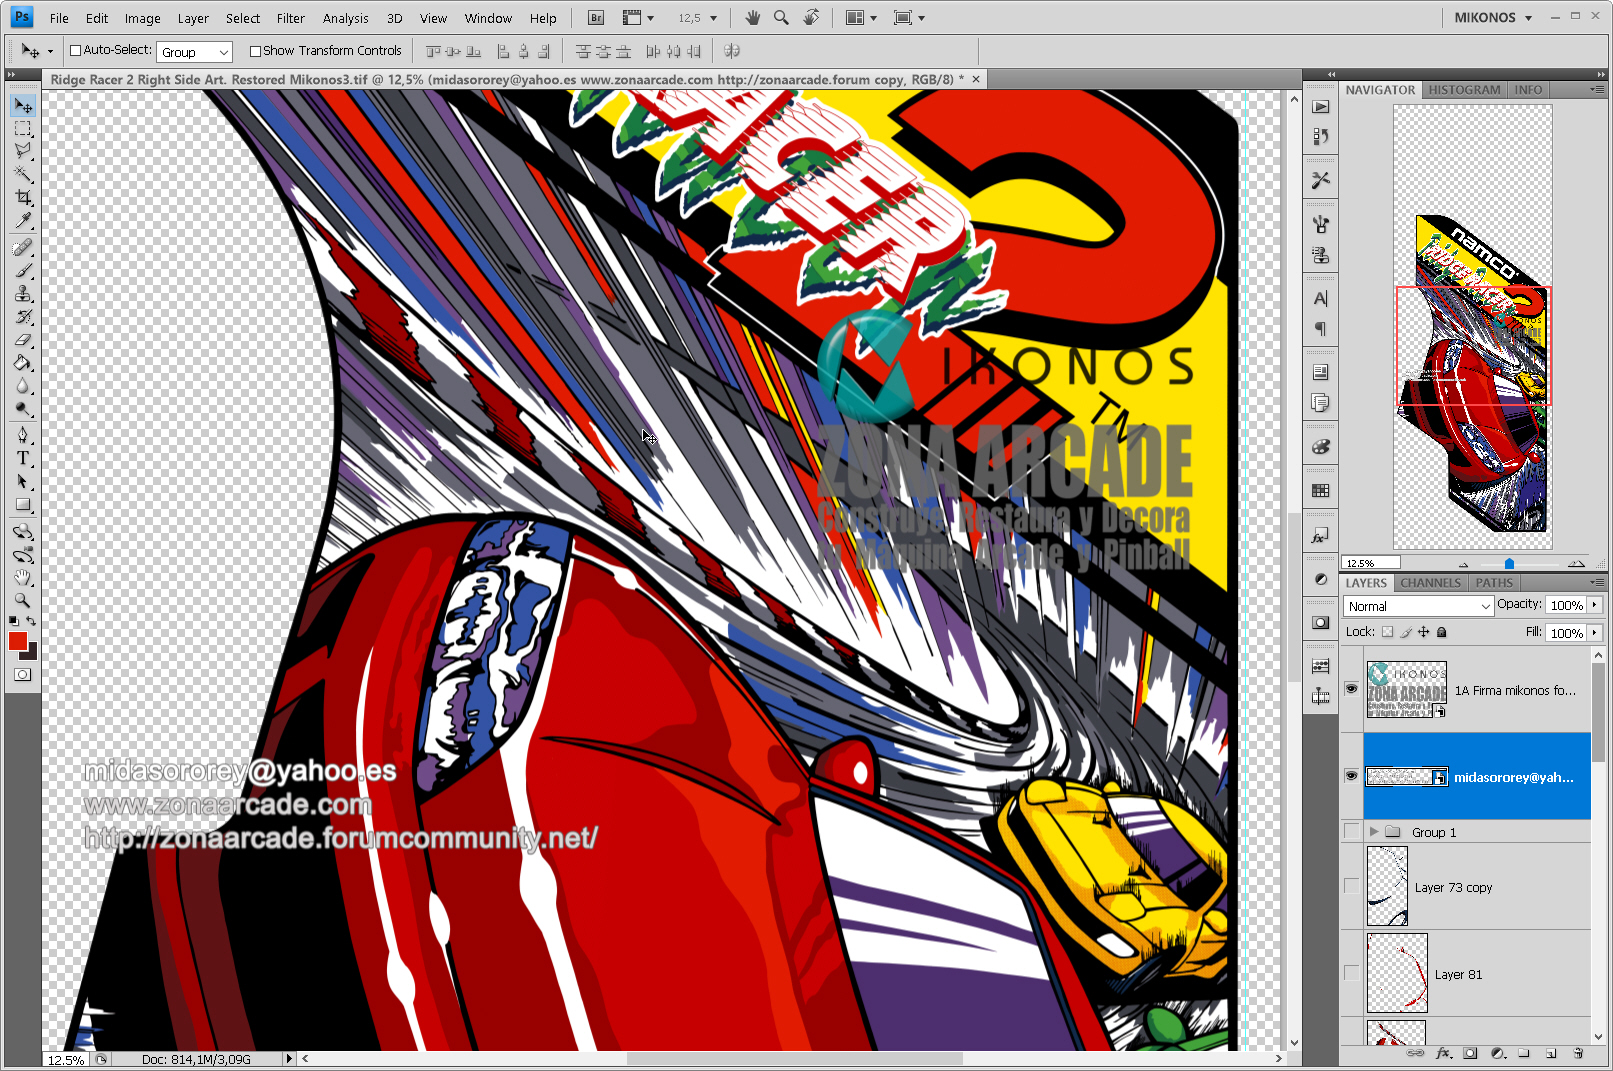 Ridge Racer 2 Right Side Art. Restored Mikonos4